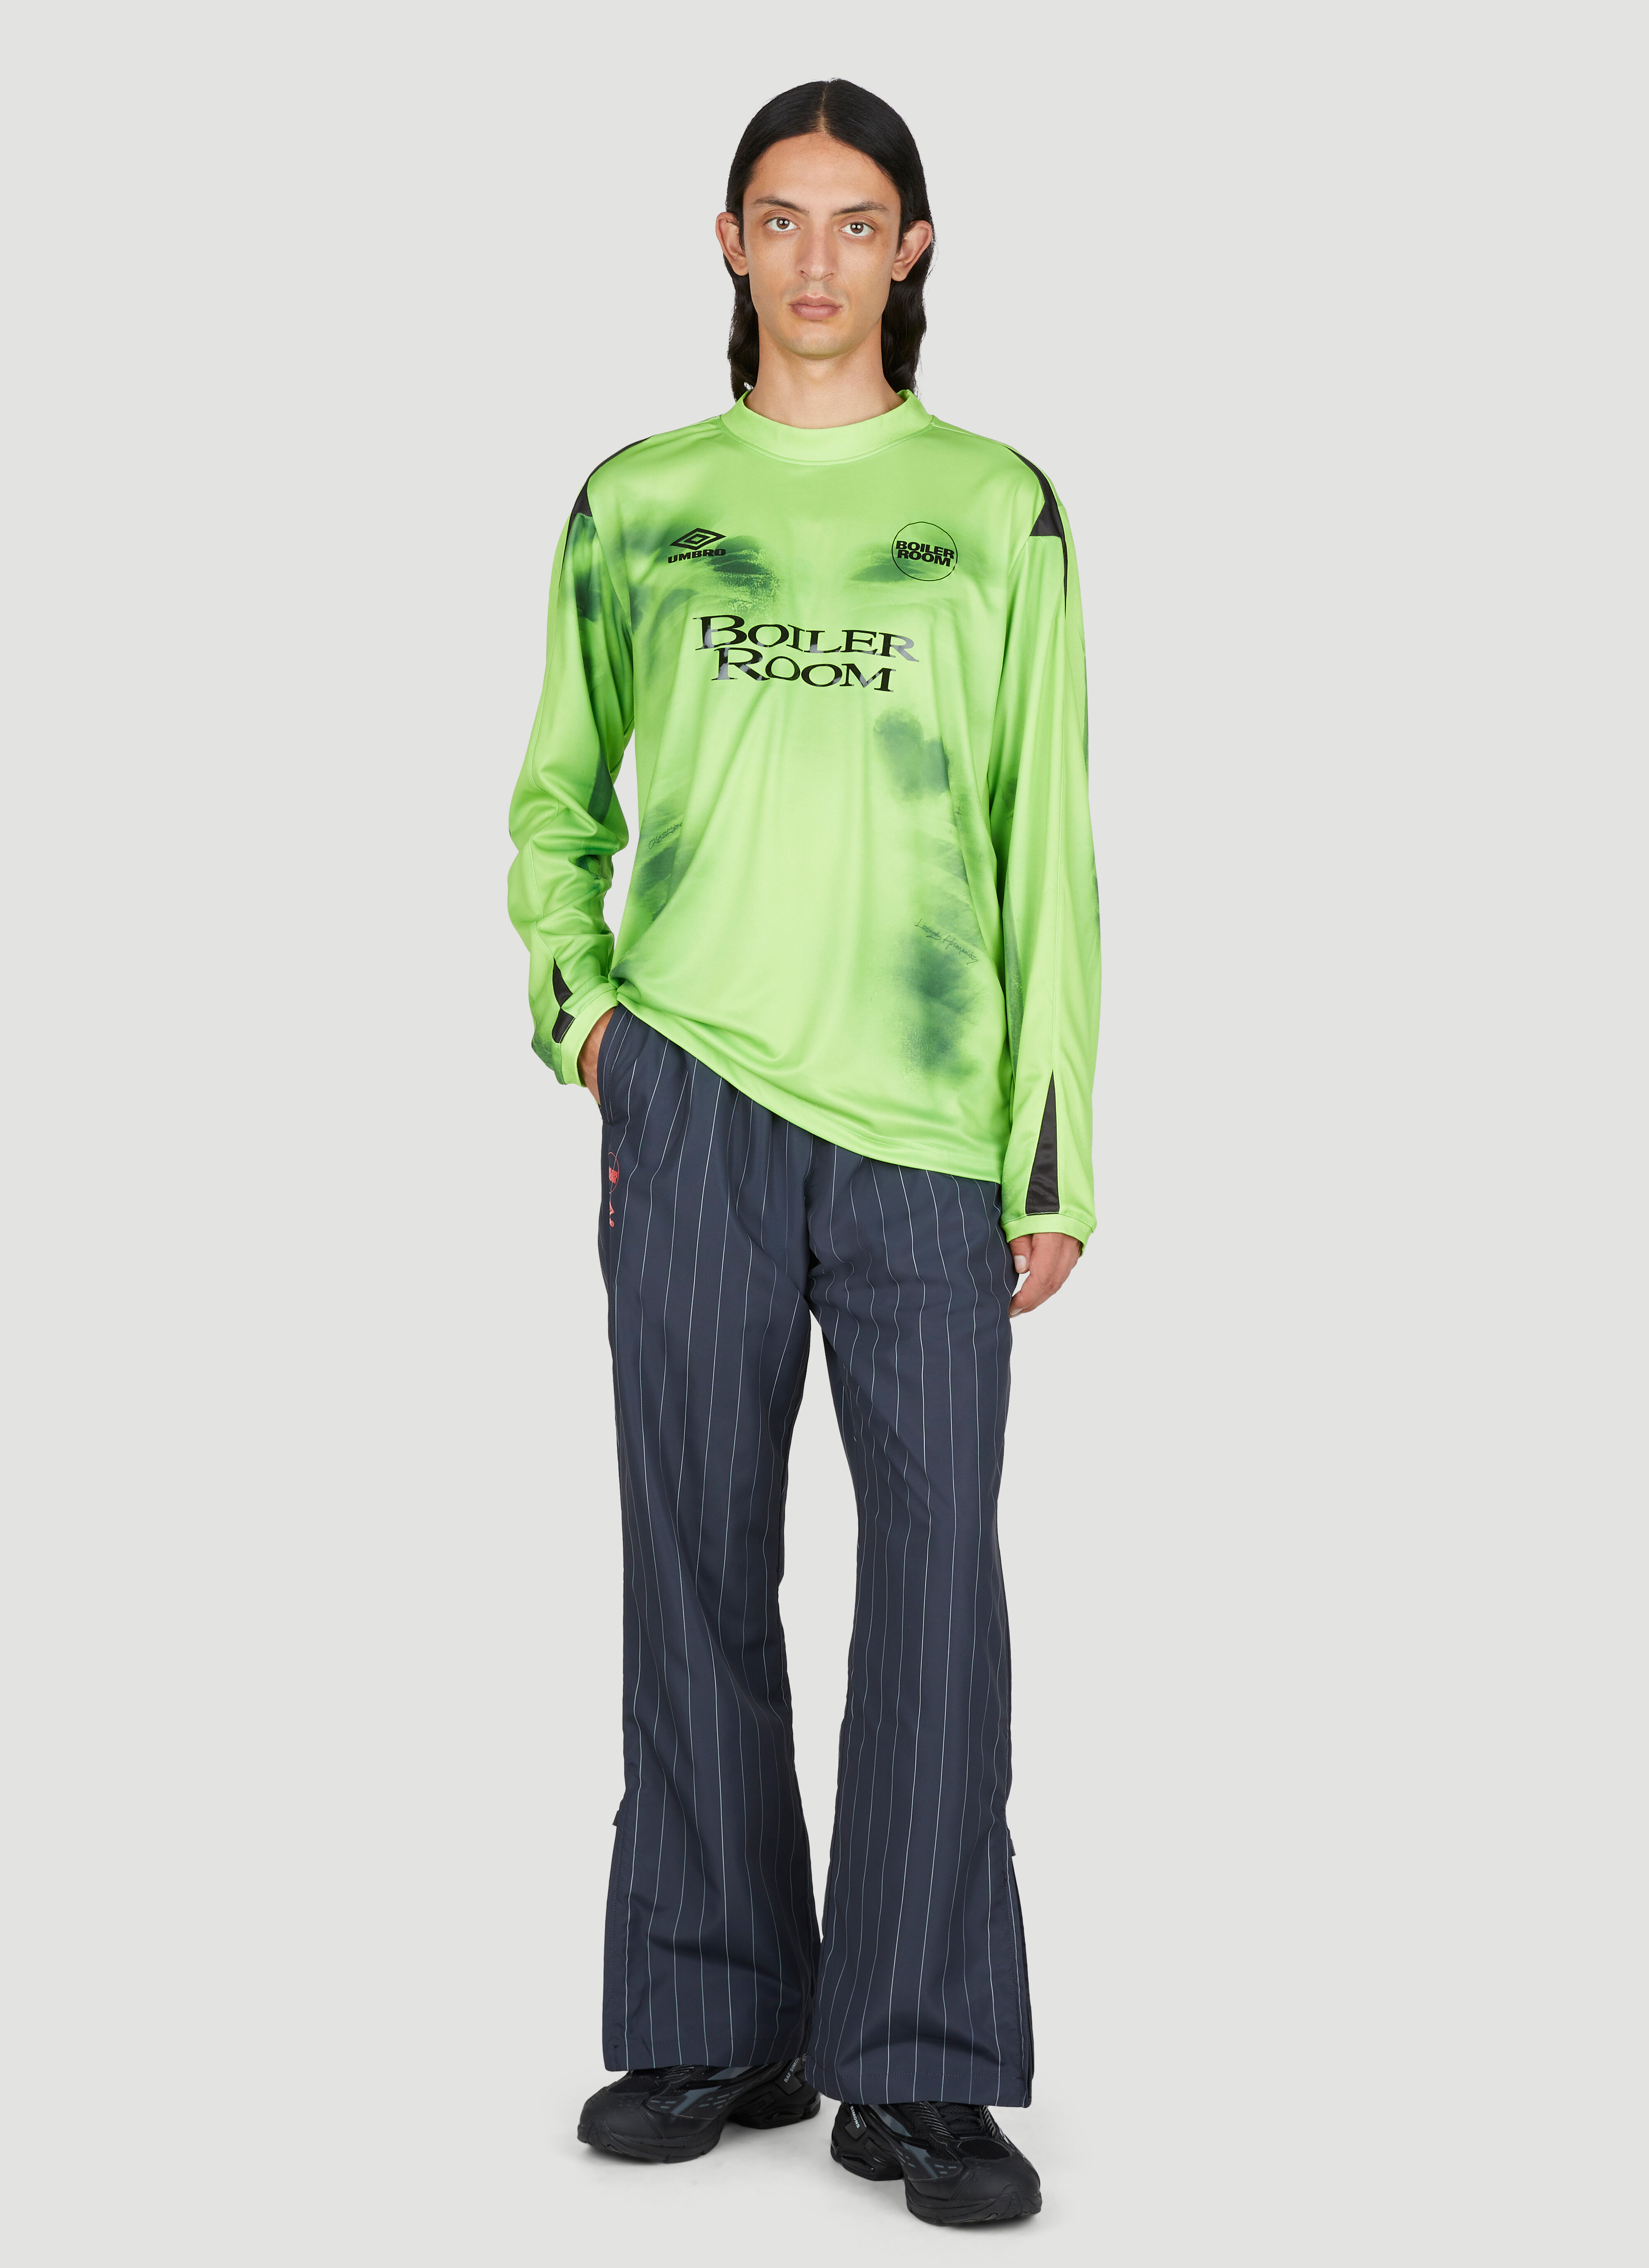 Boiler Room x Umbro Goalkeeper Sweatshirt in Green | LN-CC®